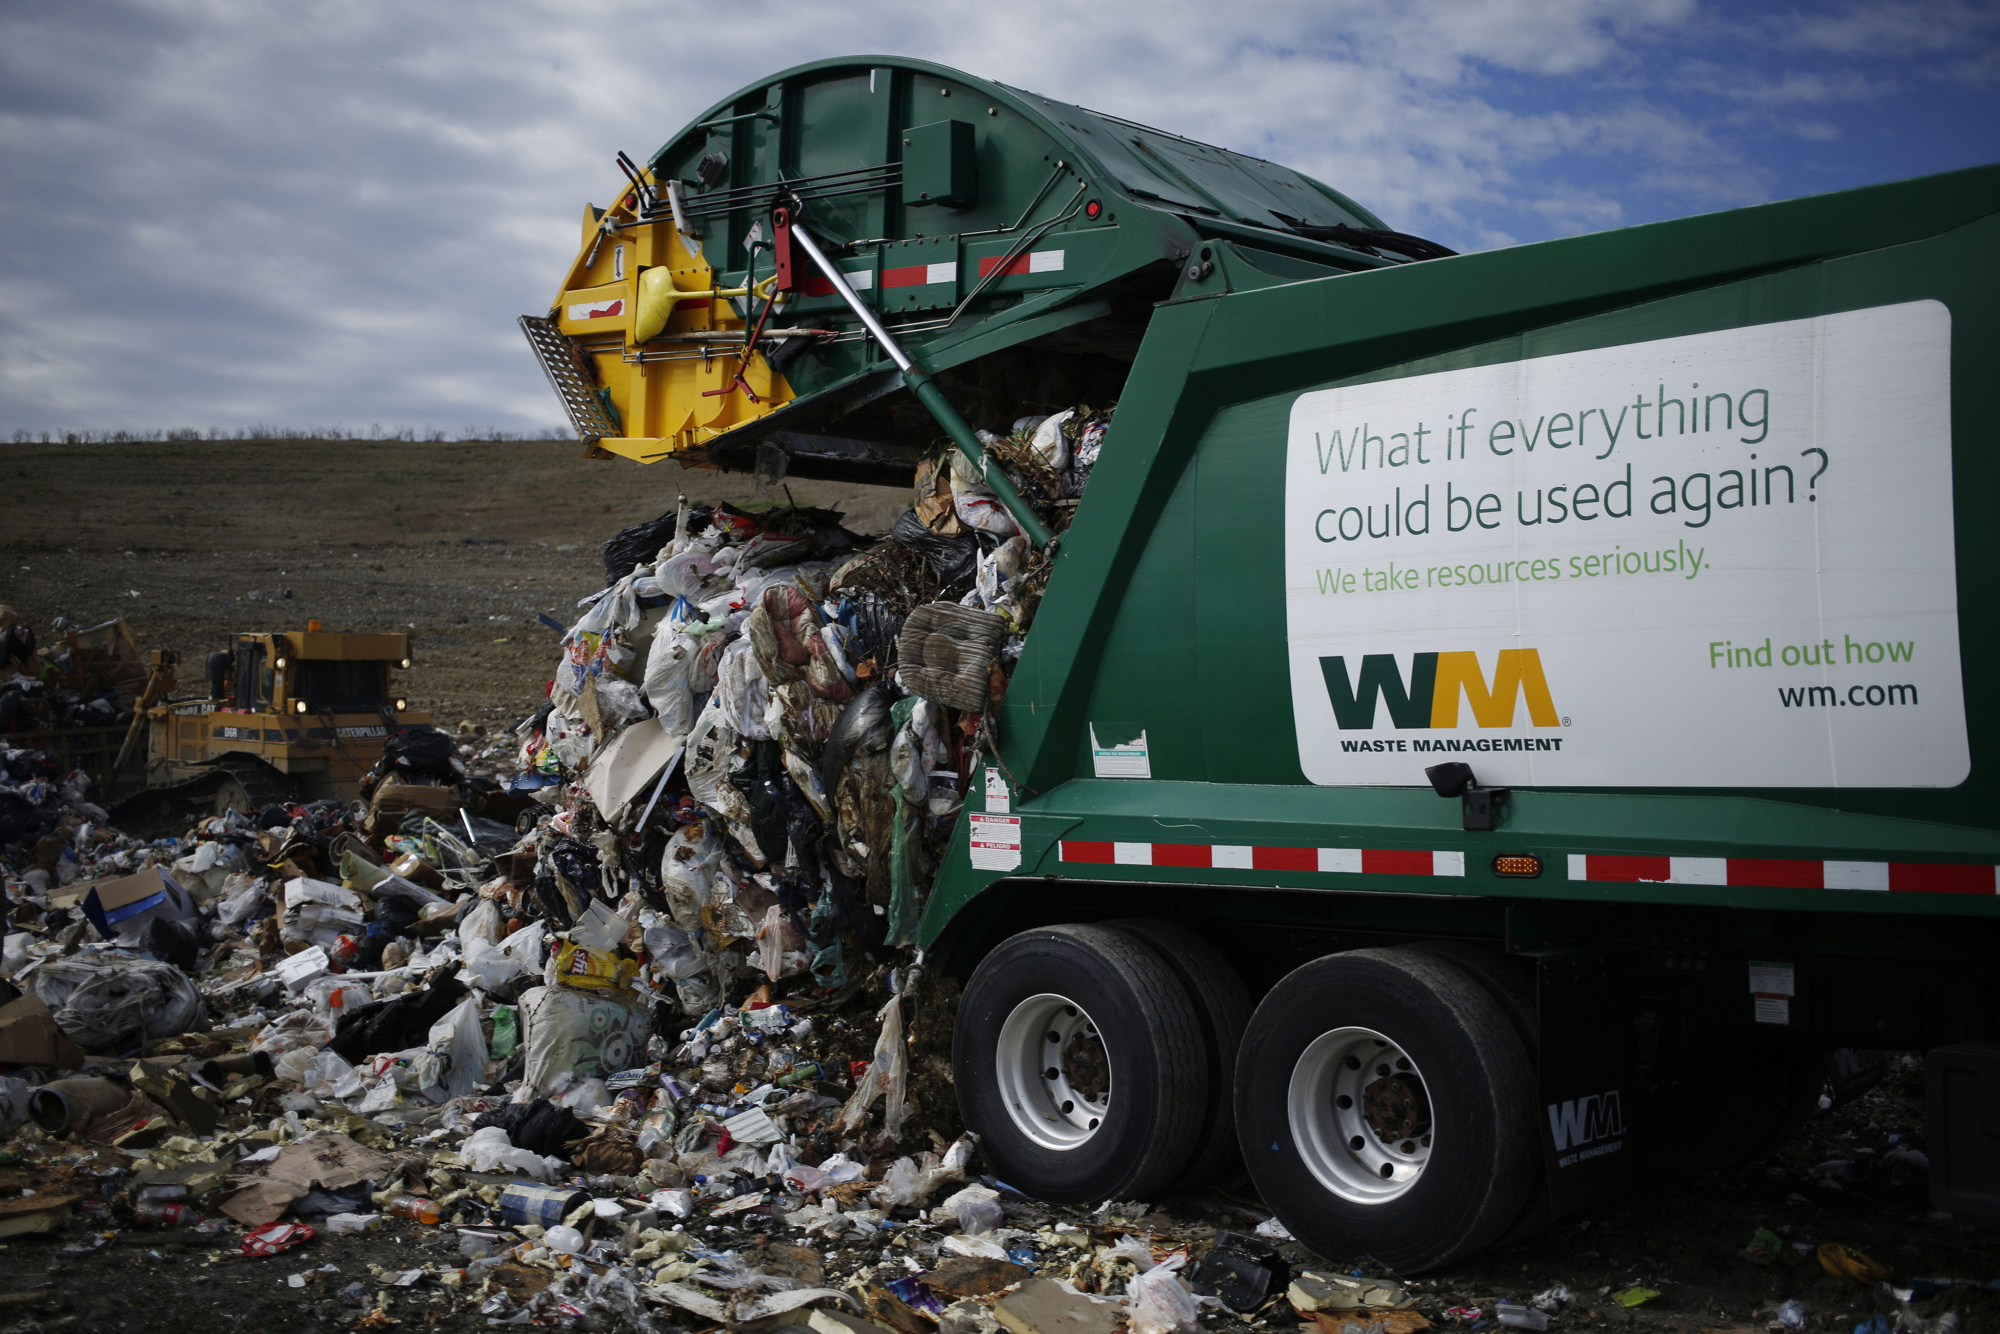 Advanced Disposal waste management